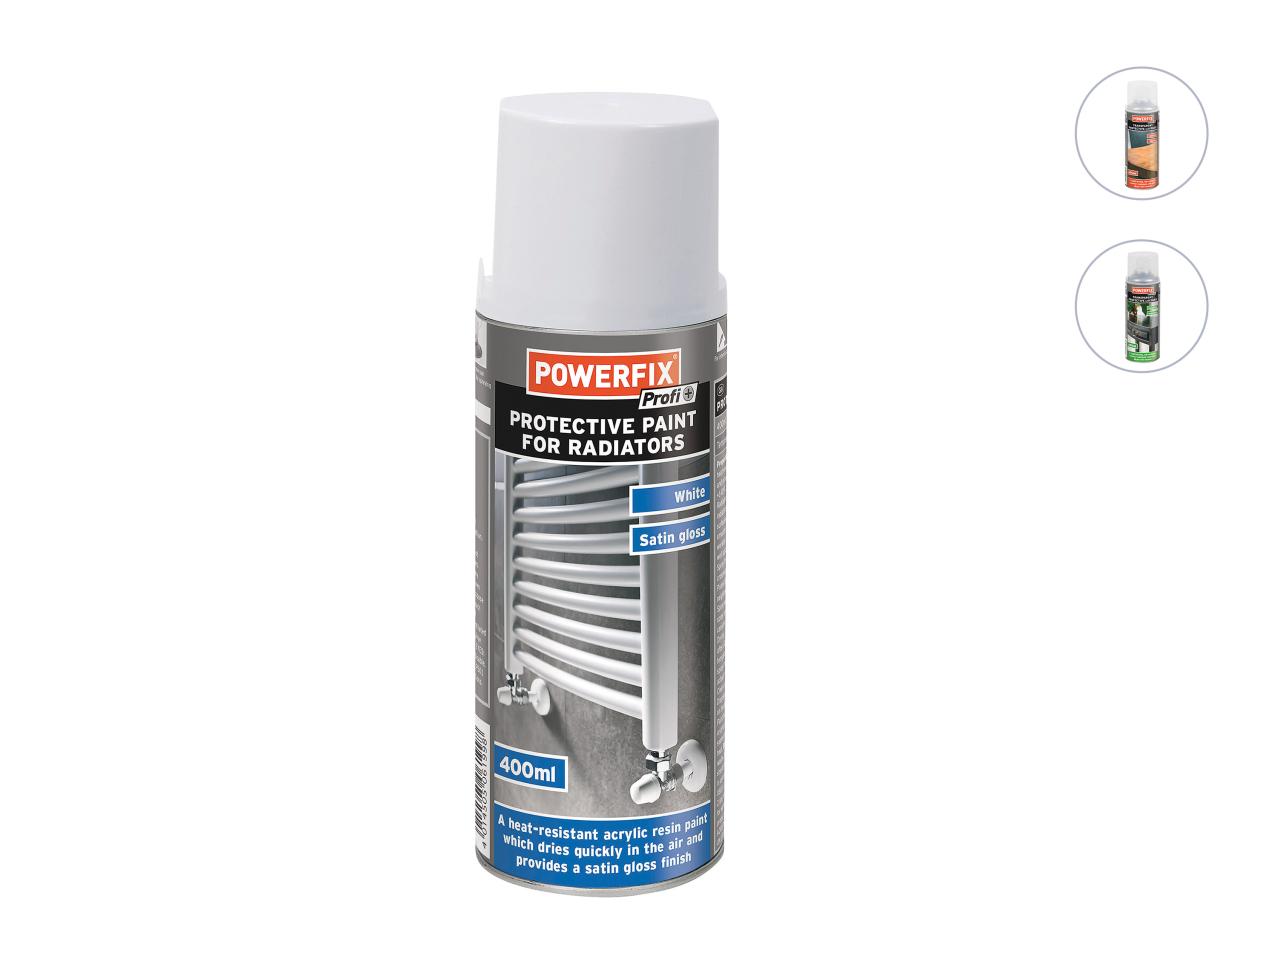 Powerfix Protection Spray Paint1